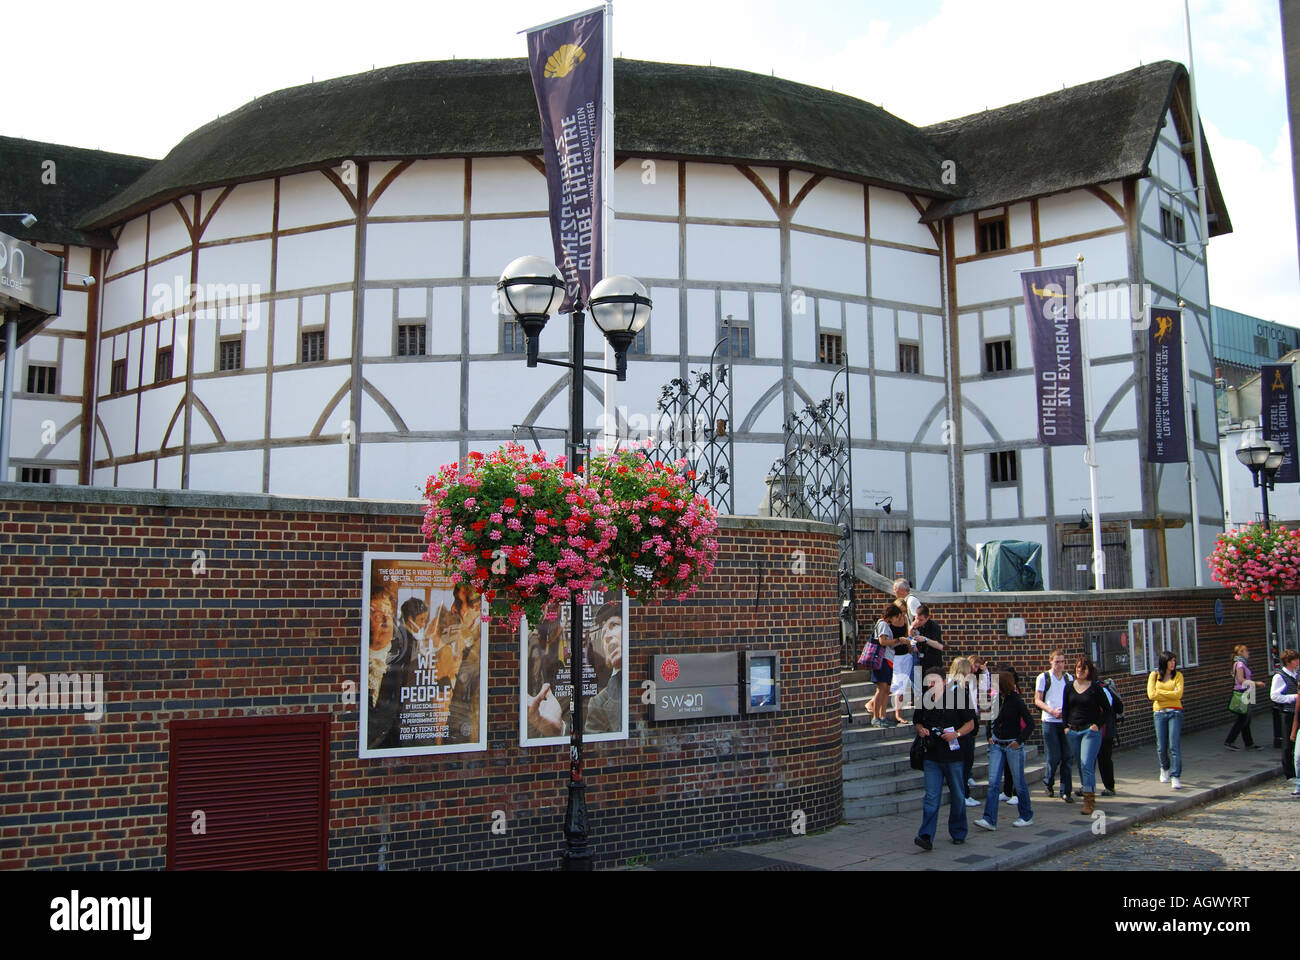 William Shakespeare's Globe Theatre, Park Street, London Borough of Southwark, Greater London, England, United Kingdom Stock Photo